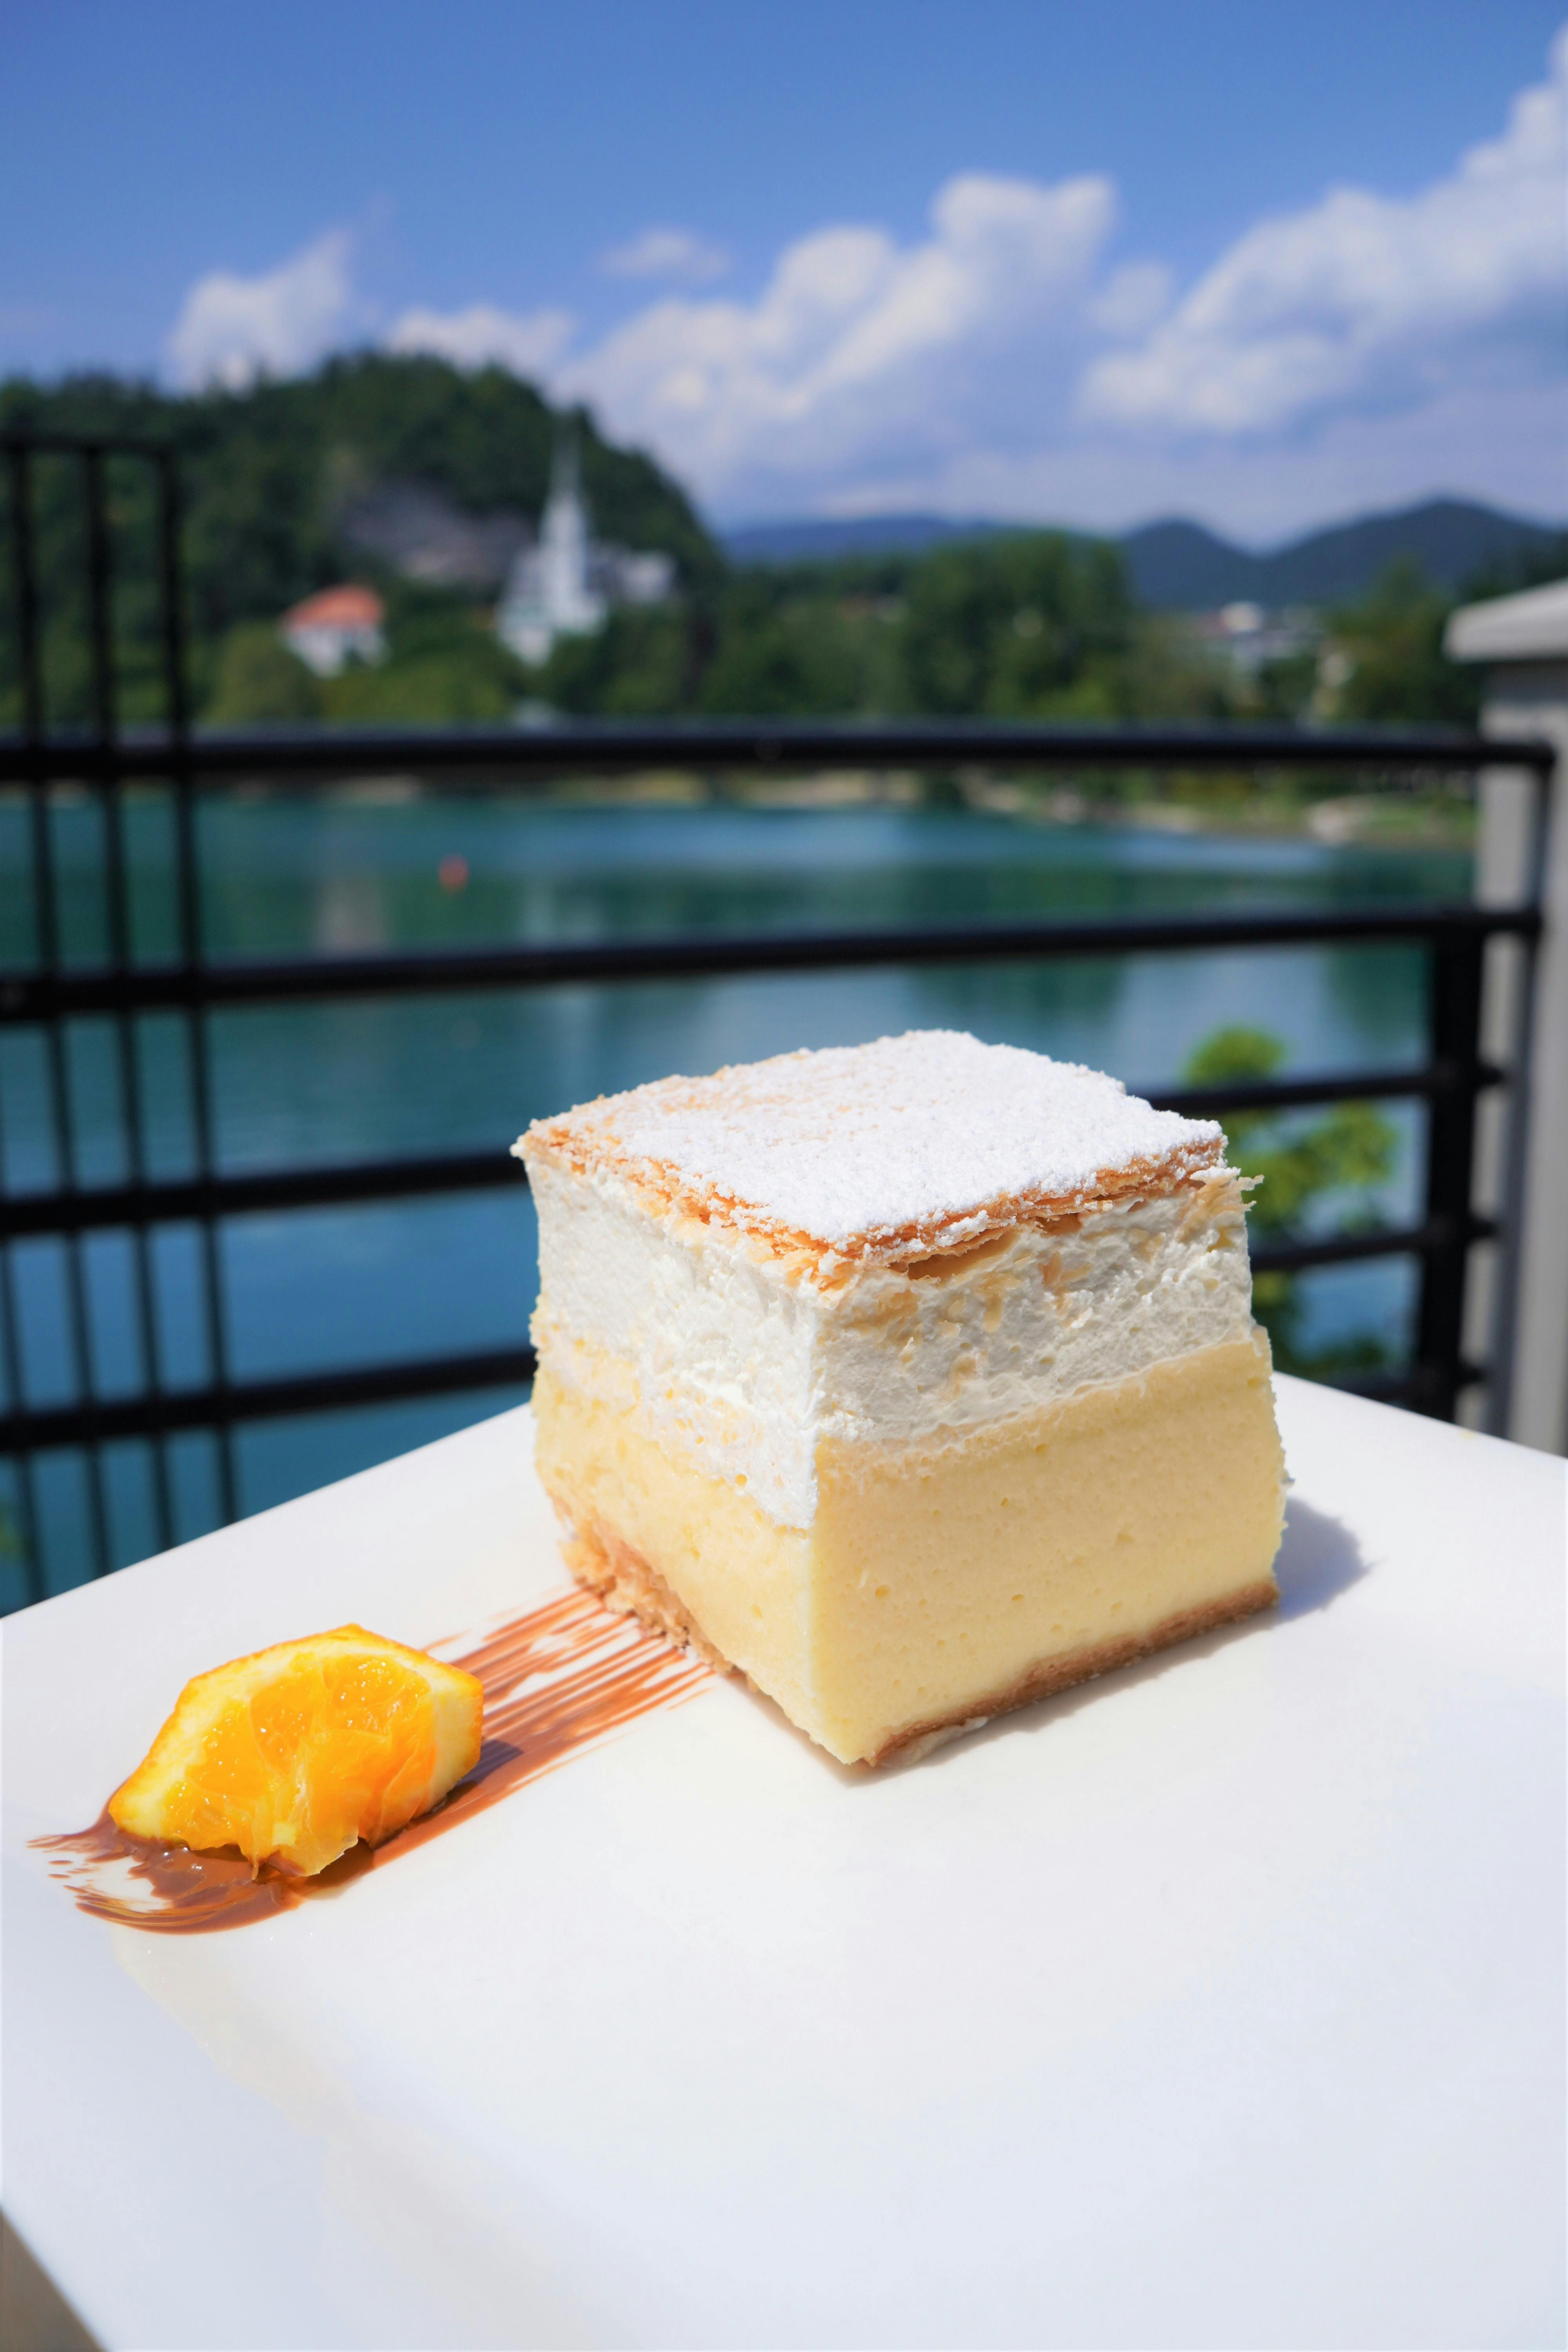 Local Vanilla Custard Cake Stock Photo - Download Image Now - iStock